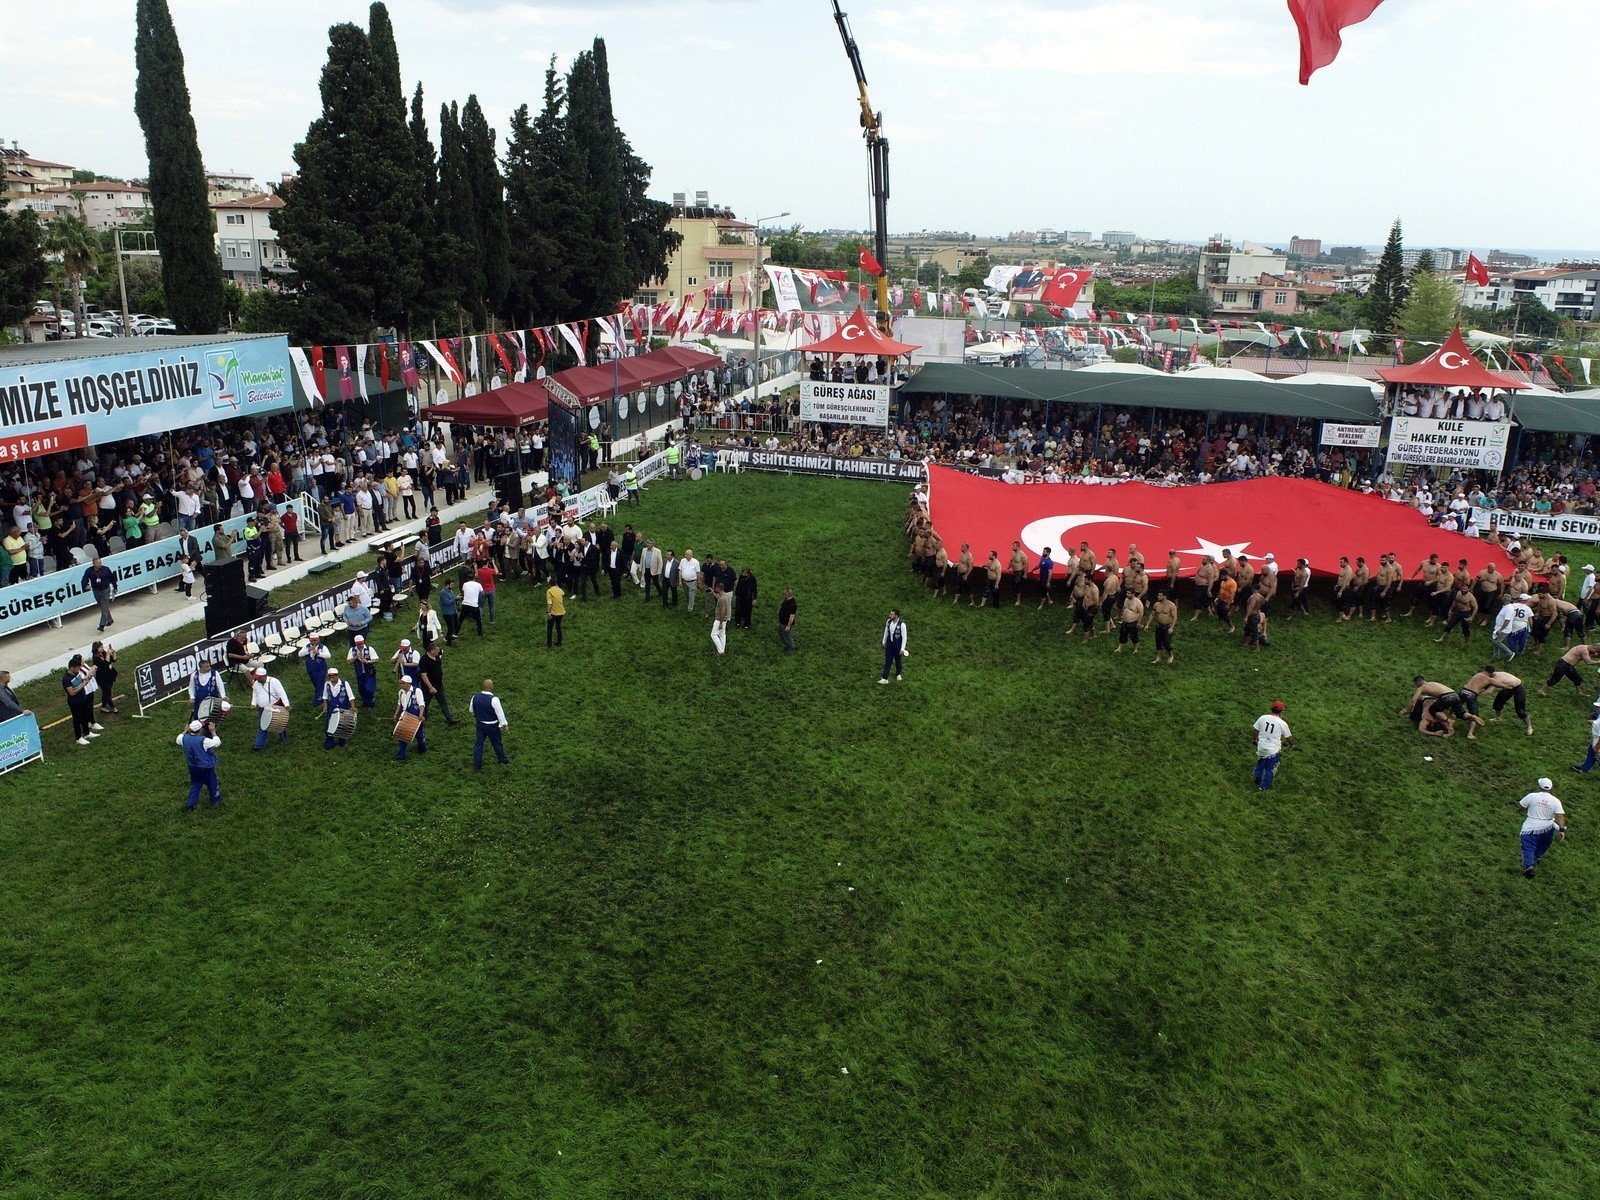 Turnamen gulat diadakan di Manavgat, Turki, 16 Mei 2022. (Foto IHA)